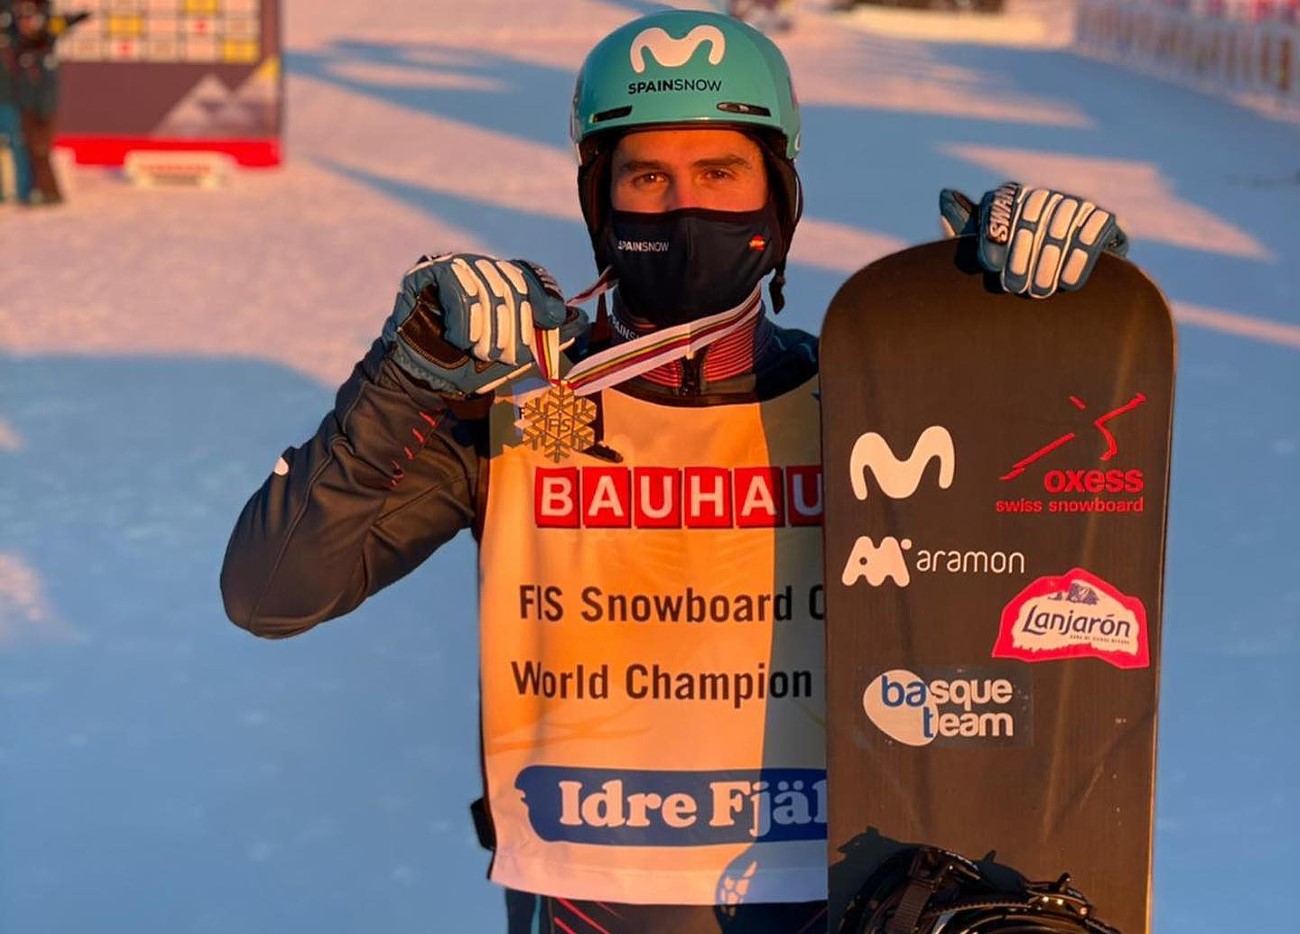 ¡Increíble Lucas Eguibar! Nuevo campeón del Mundo de boardercross